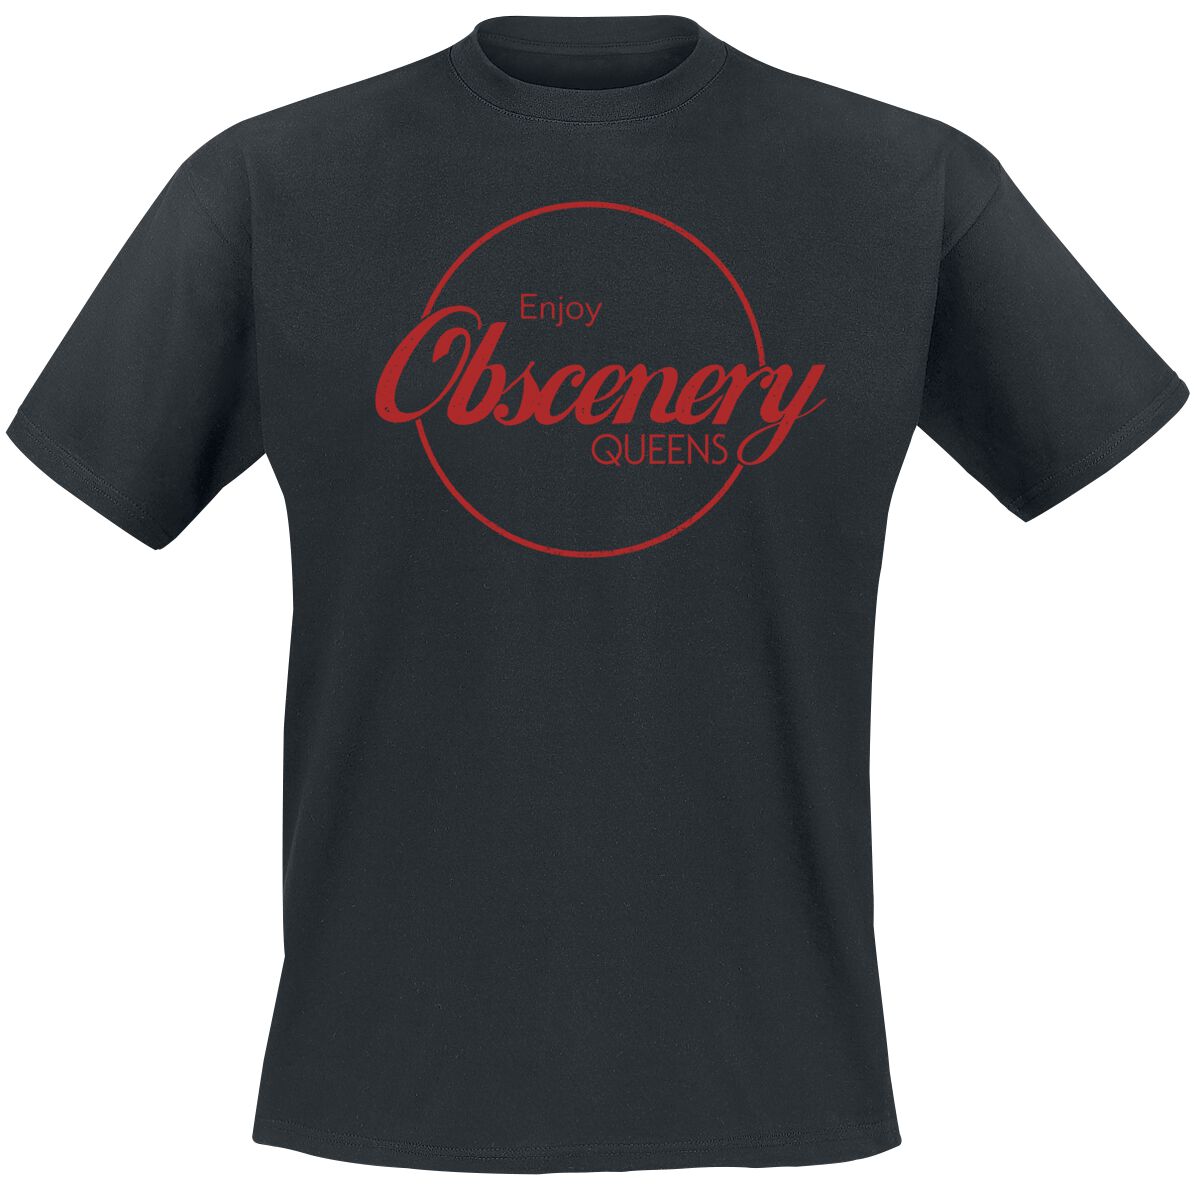 Queens Of The Stone Age Enjoy Obscenery T-Shirt schwarz in XL